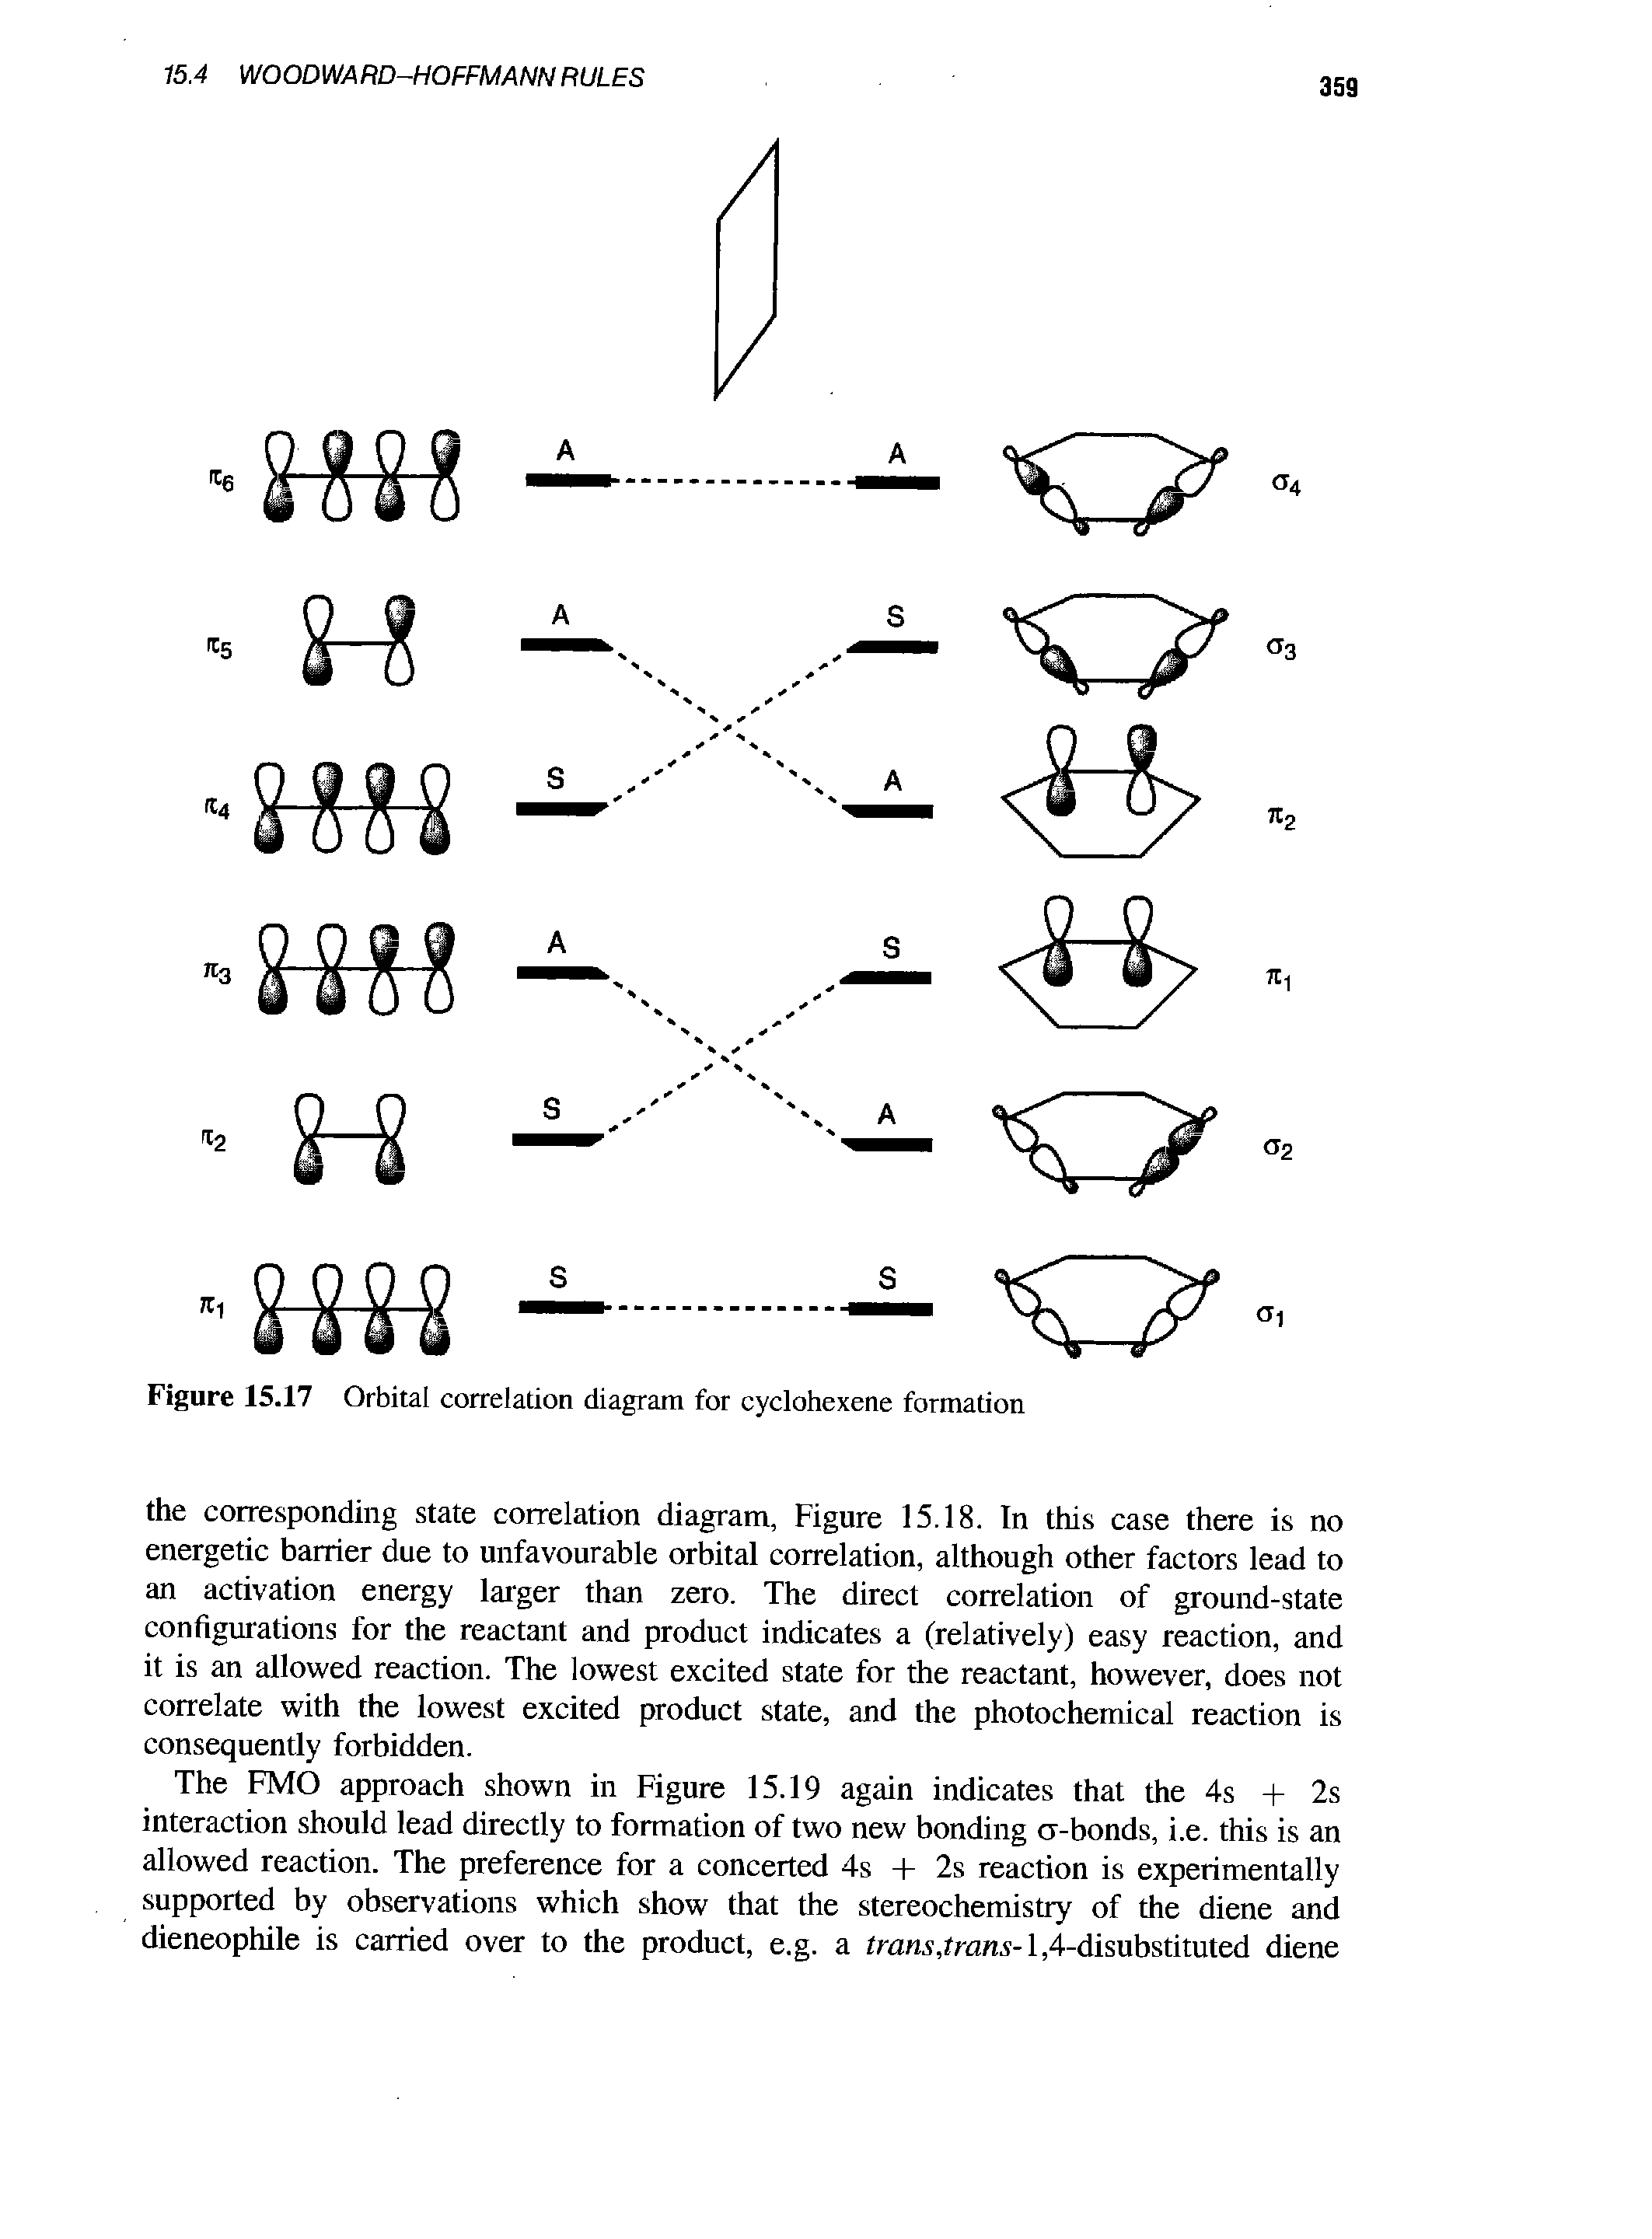 Figure 15.17 Orbital correlation diagram for cyclohexene formation...